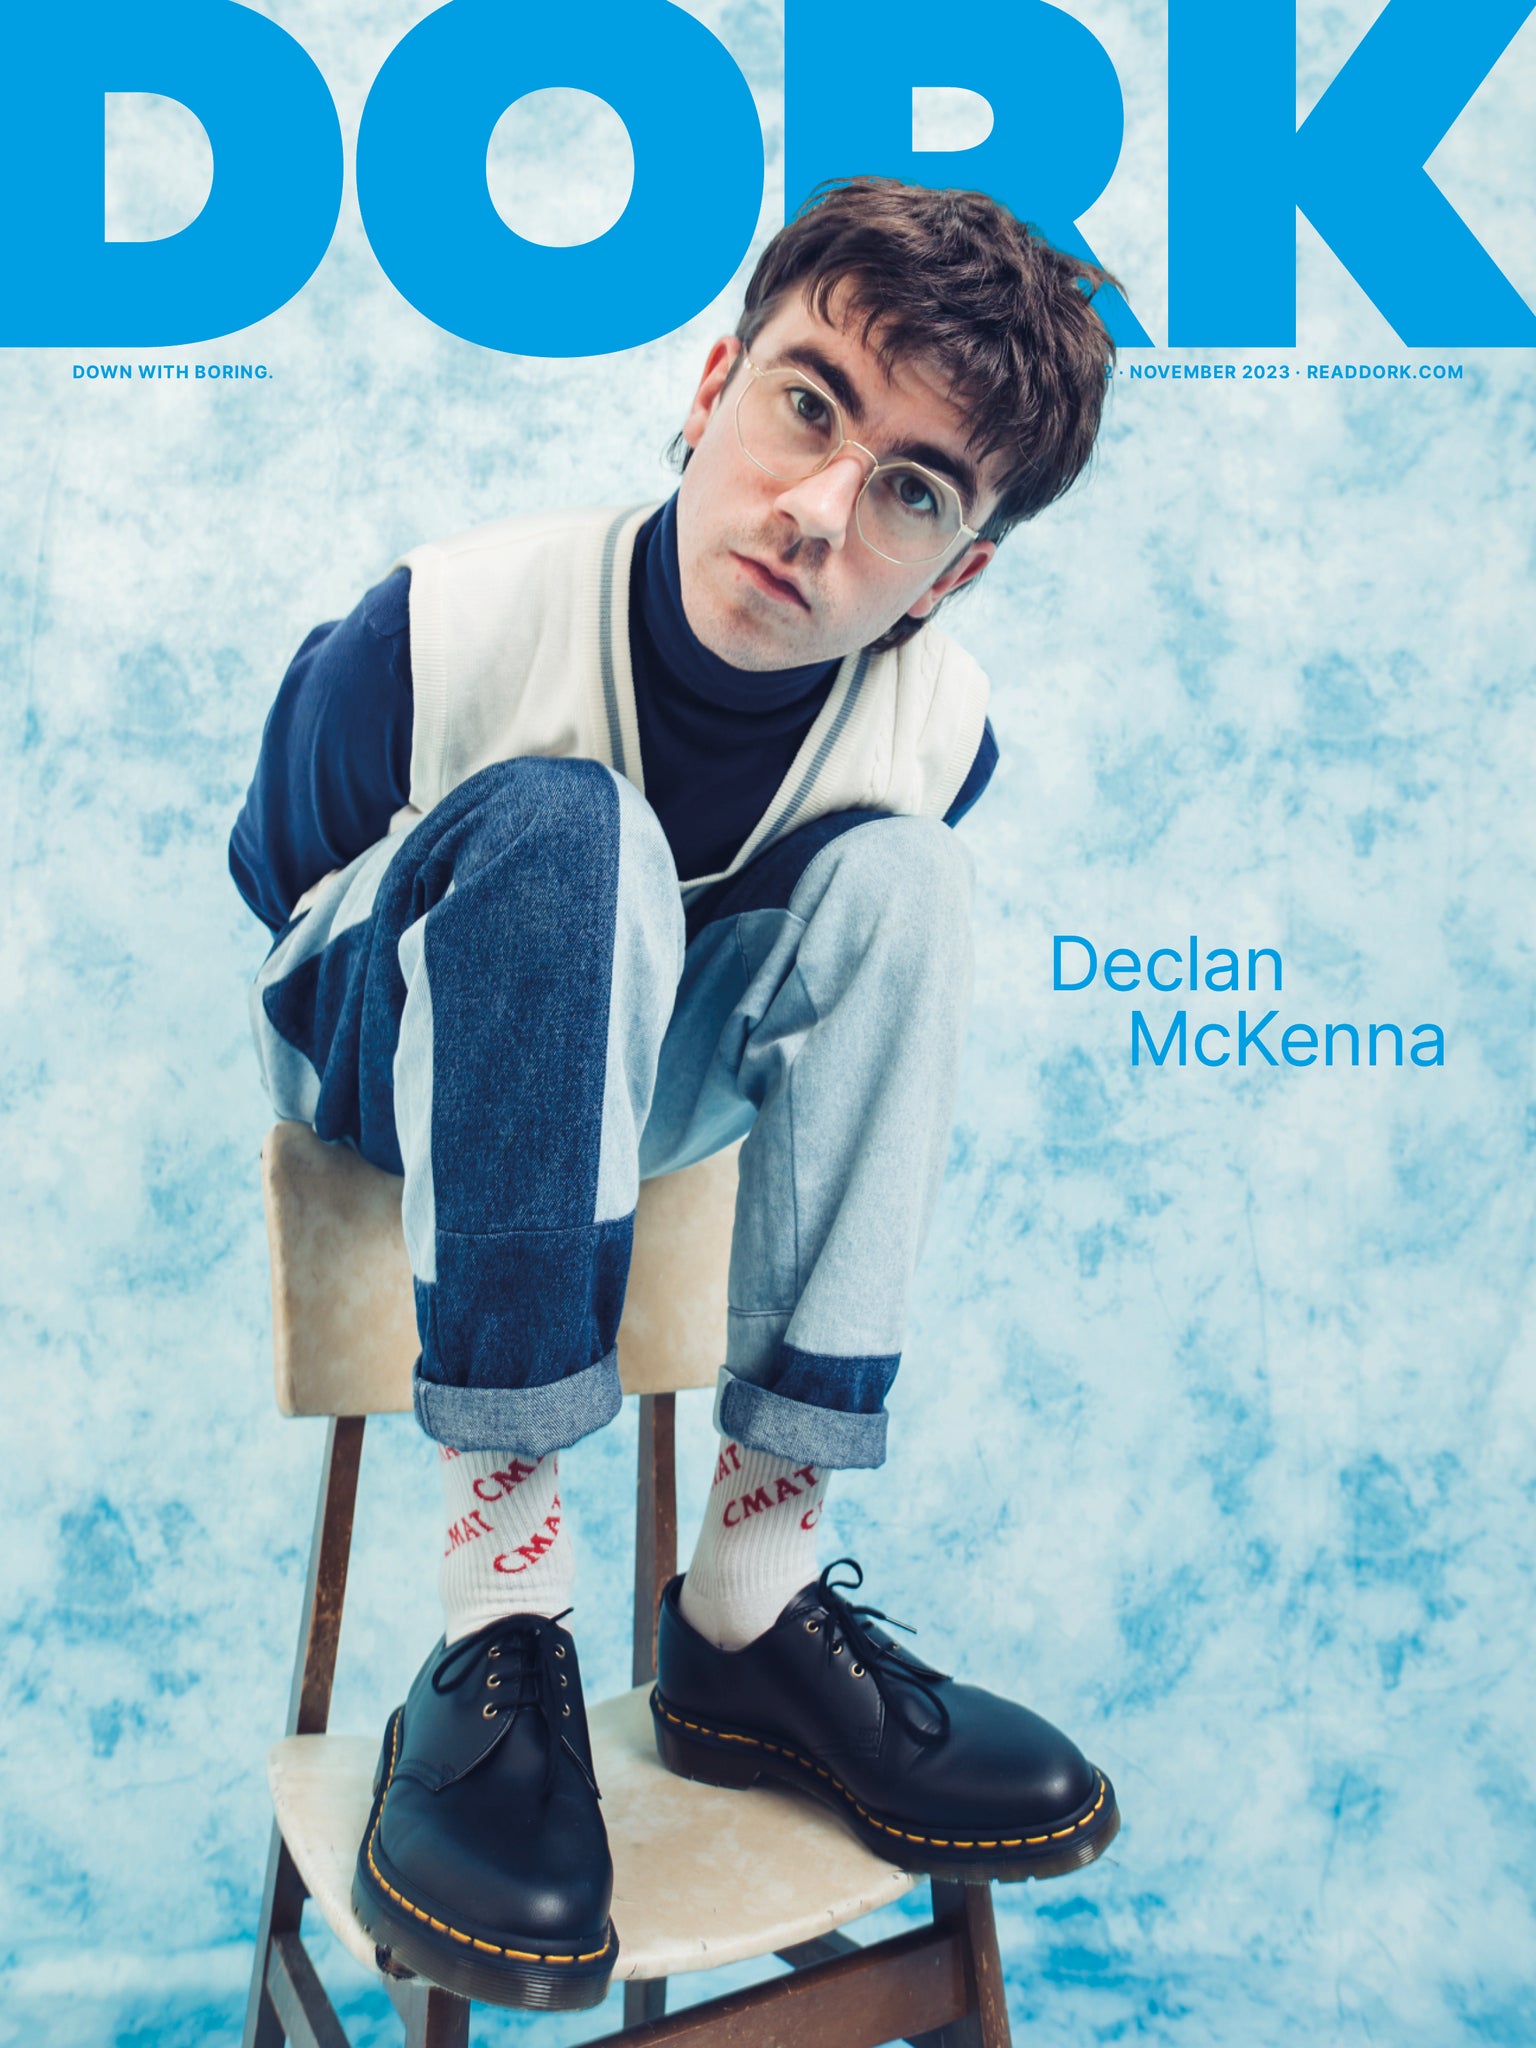 Dork, May 2023 (PVRIS cover) by Dork - Issuu